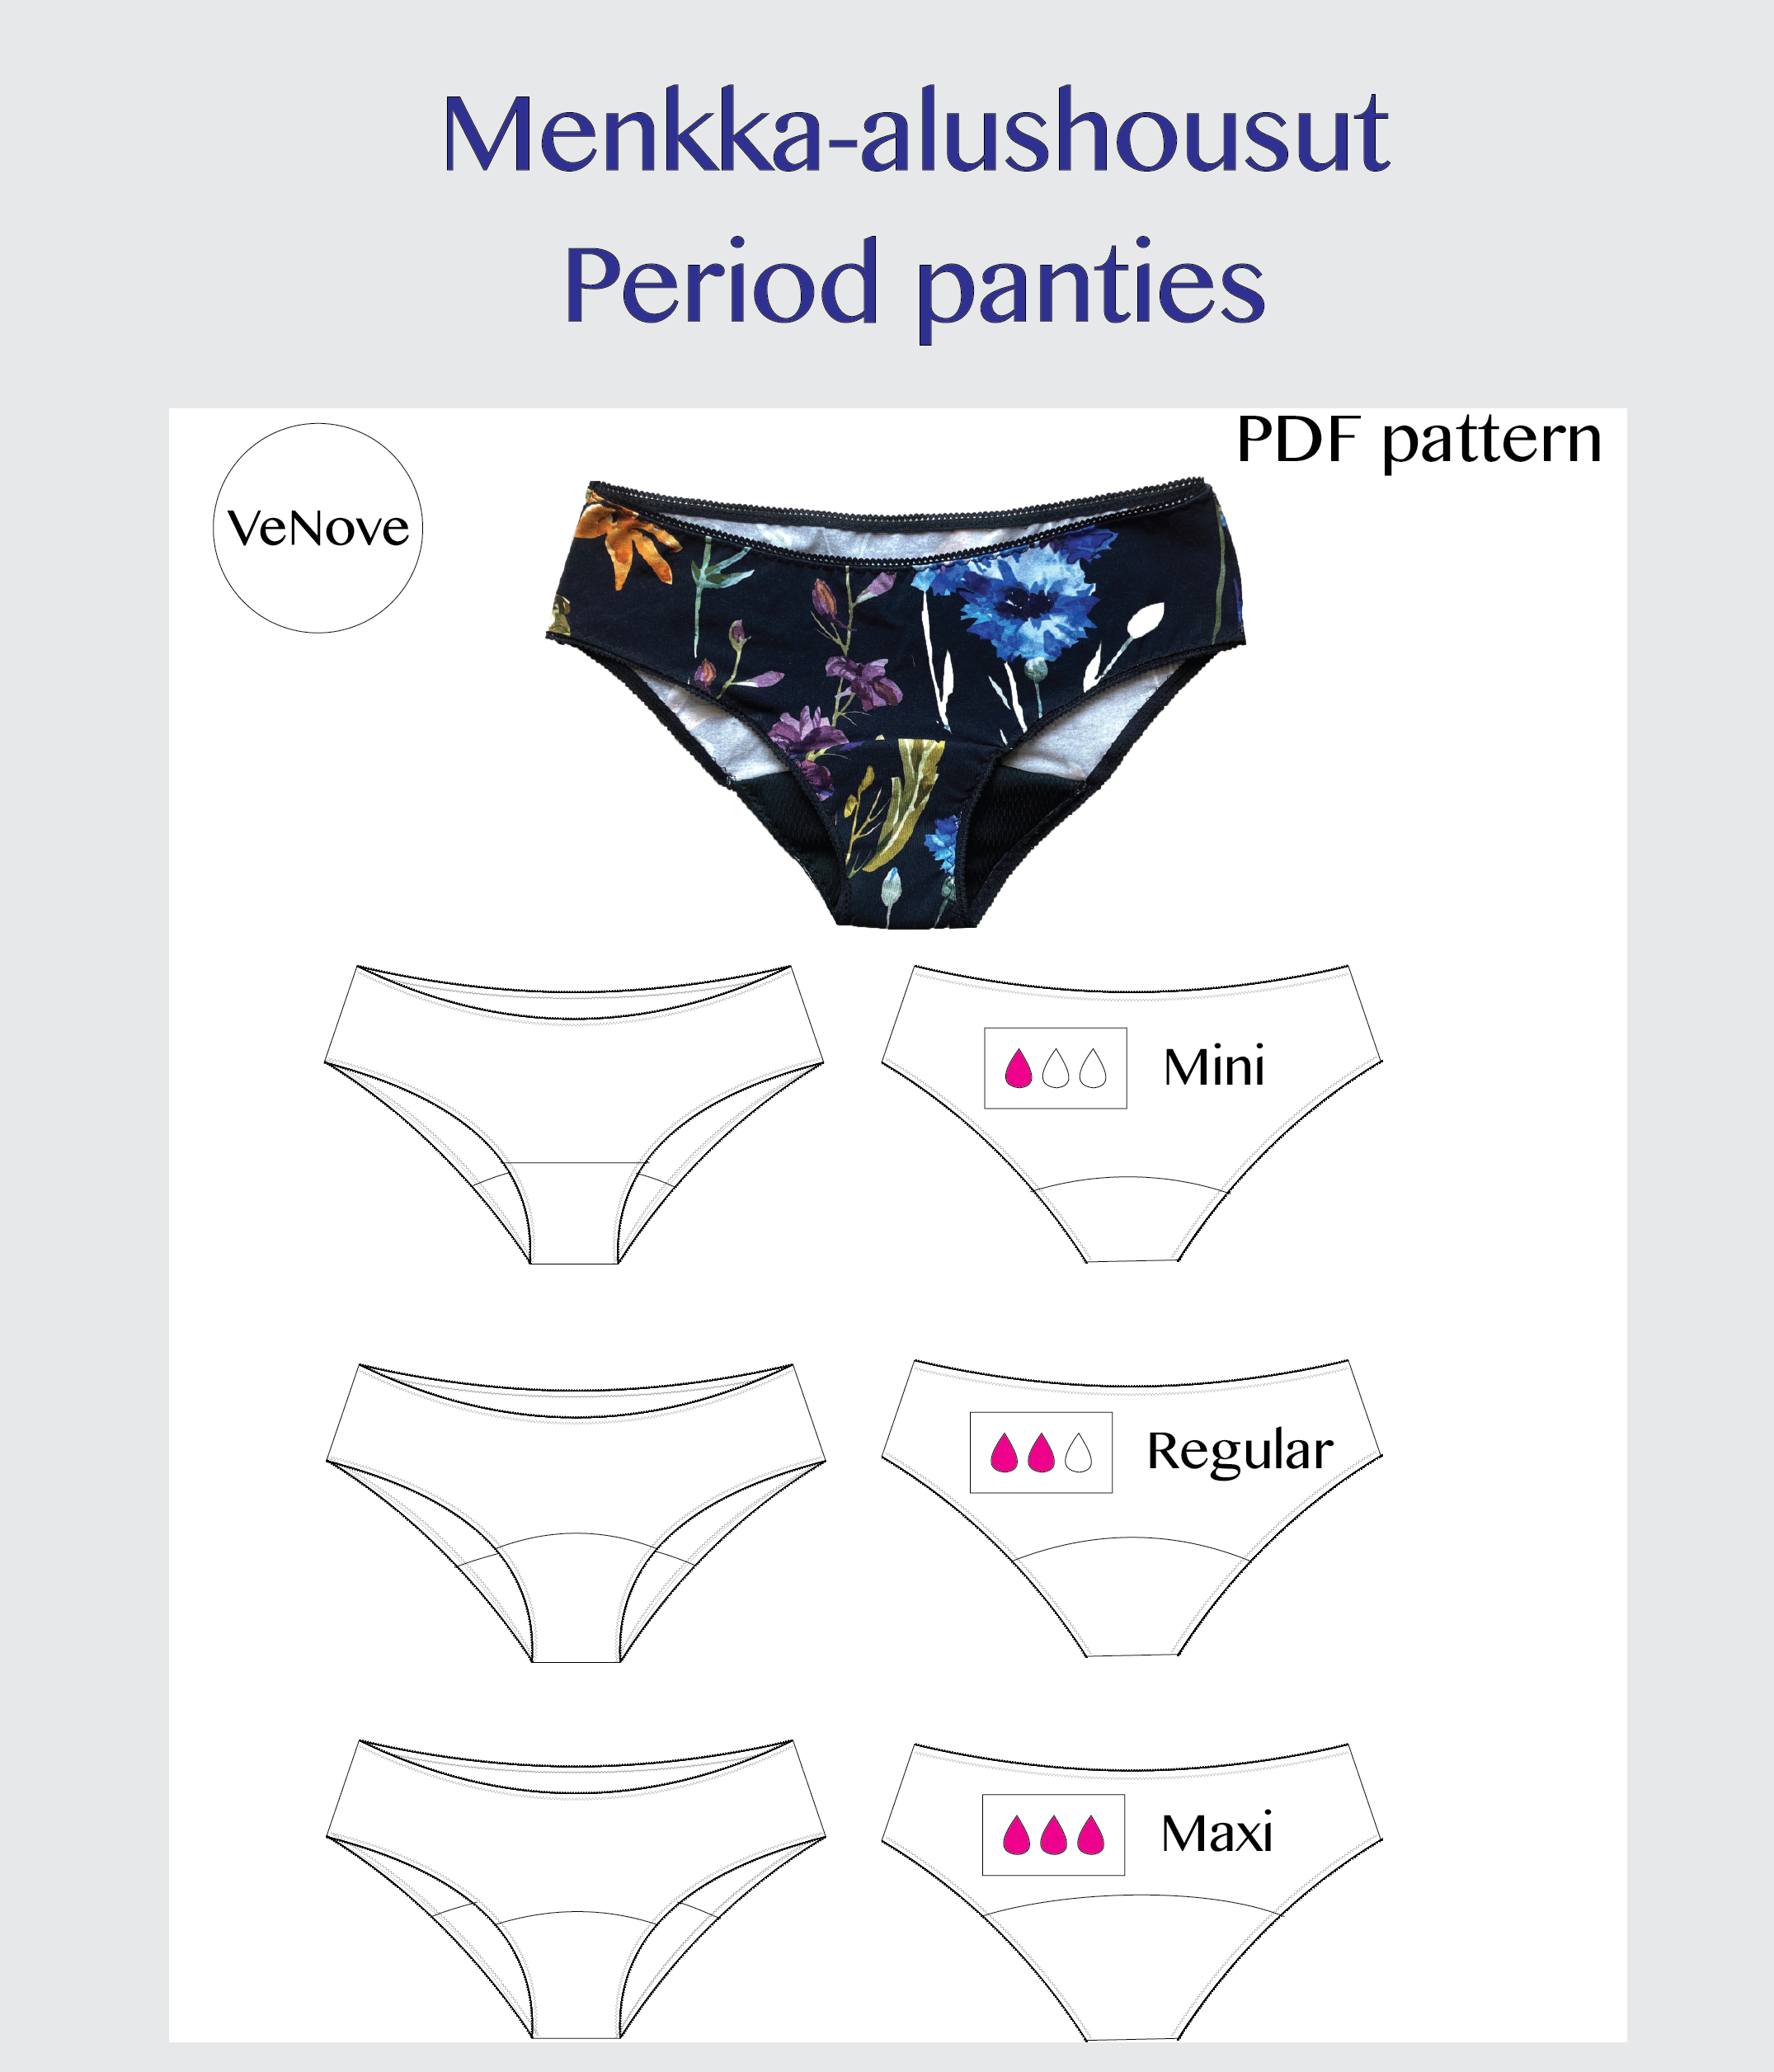 VeNove period panties PDF sewing pattern